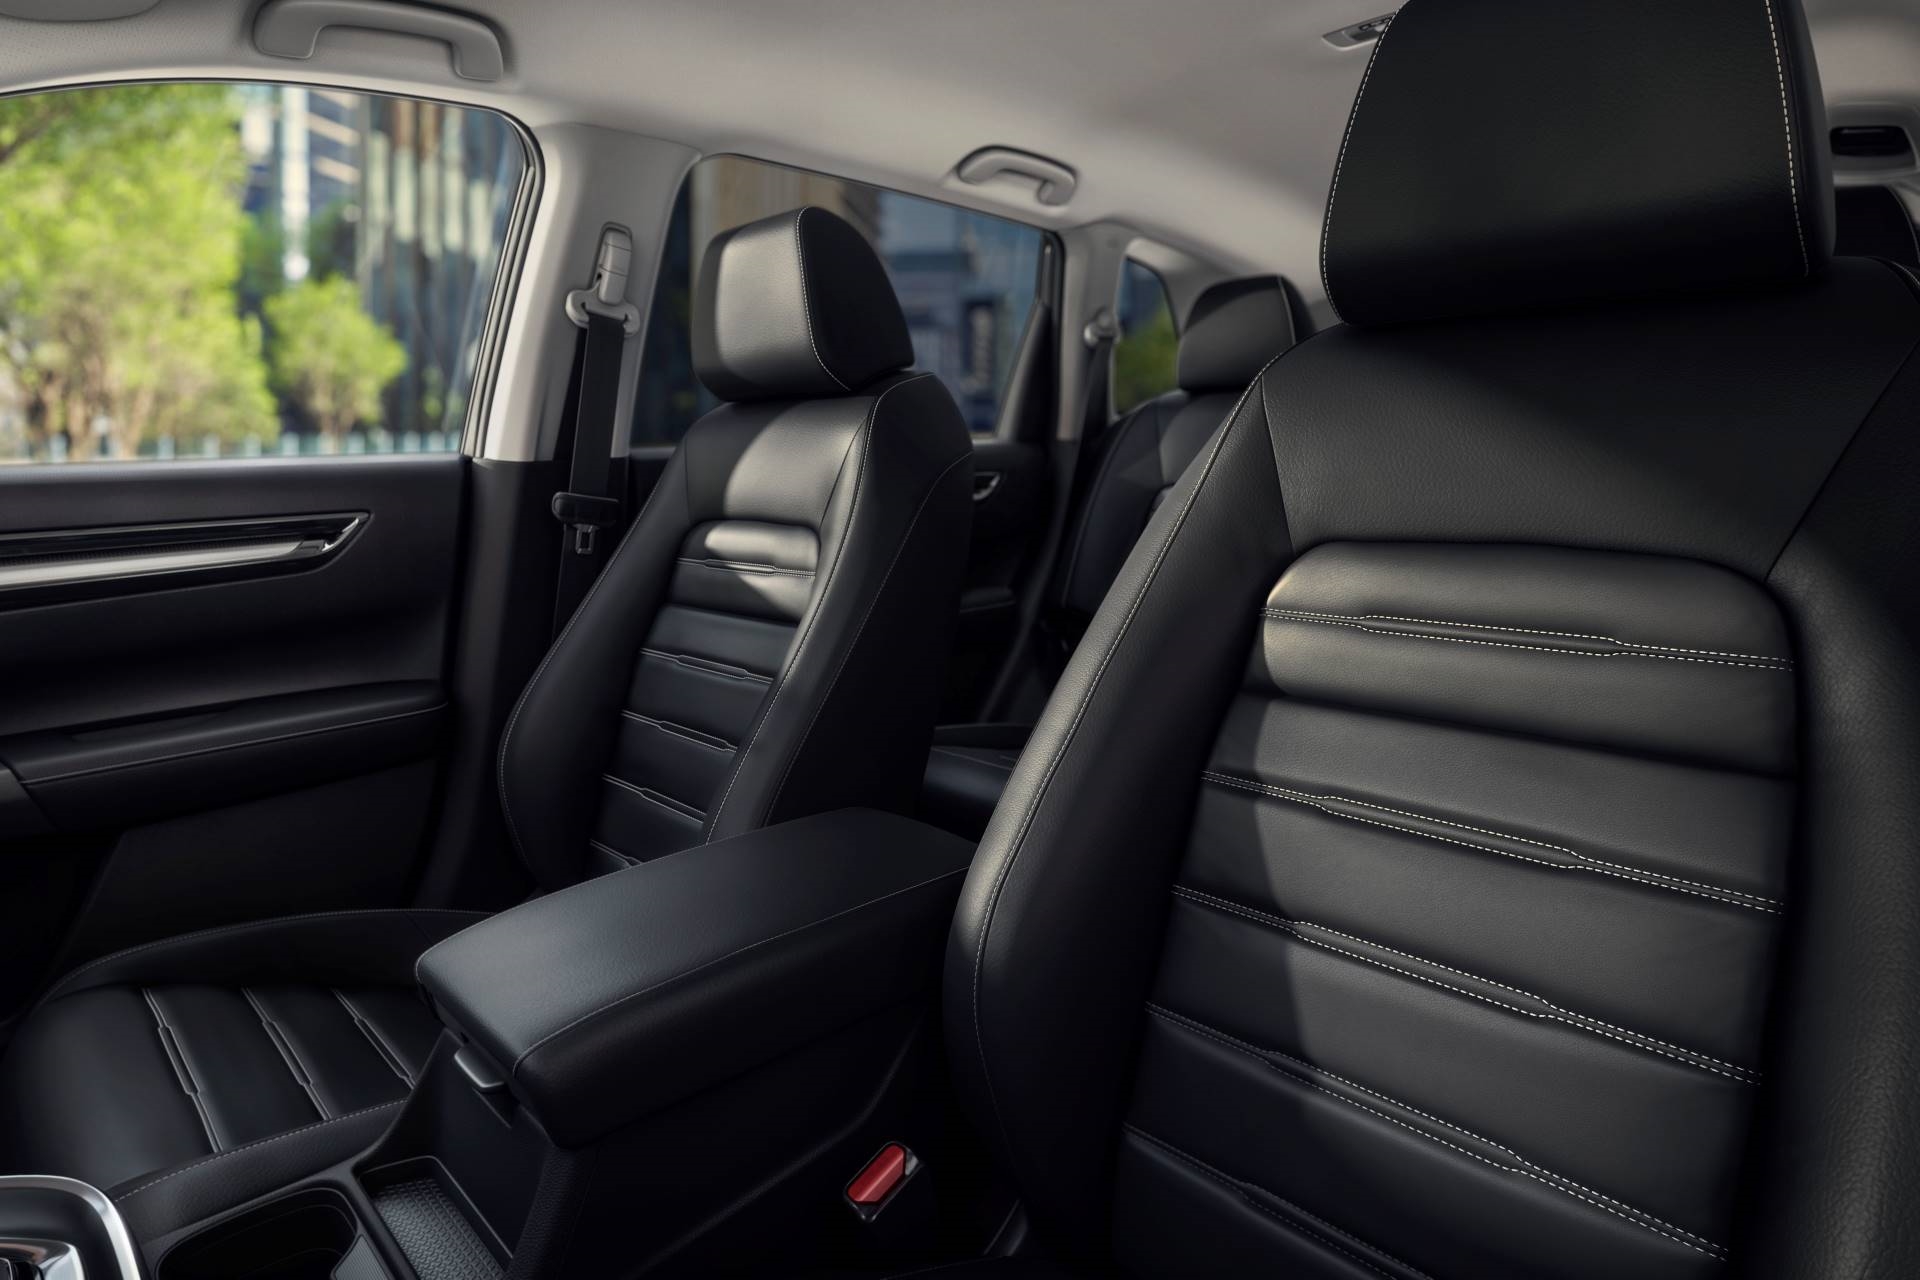 Next generation Honda CR-V sporting spotless seats and center console.